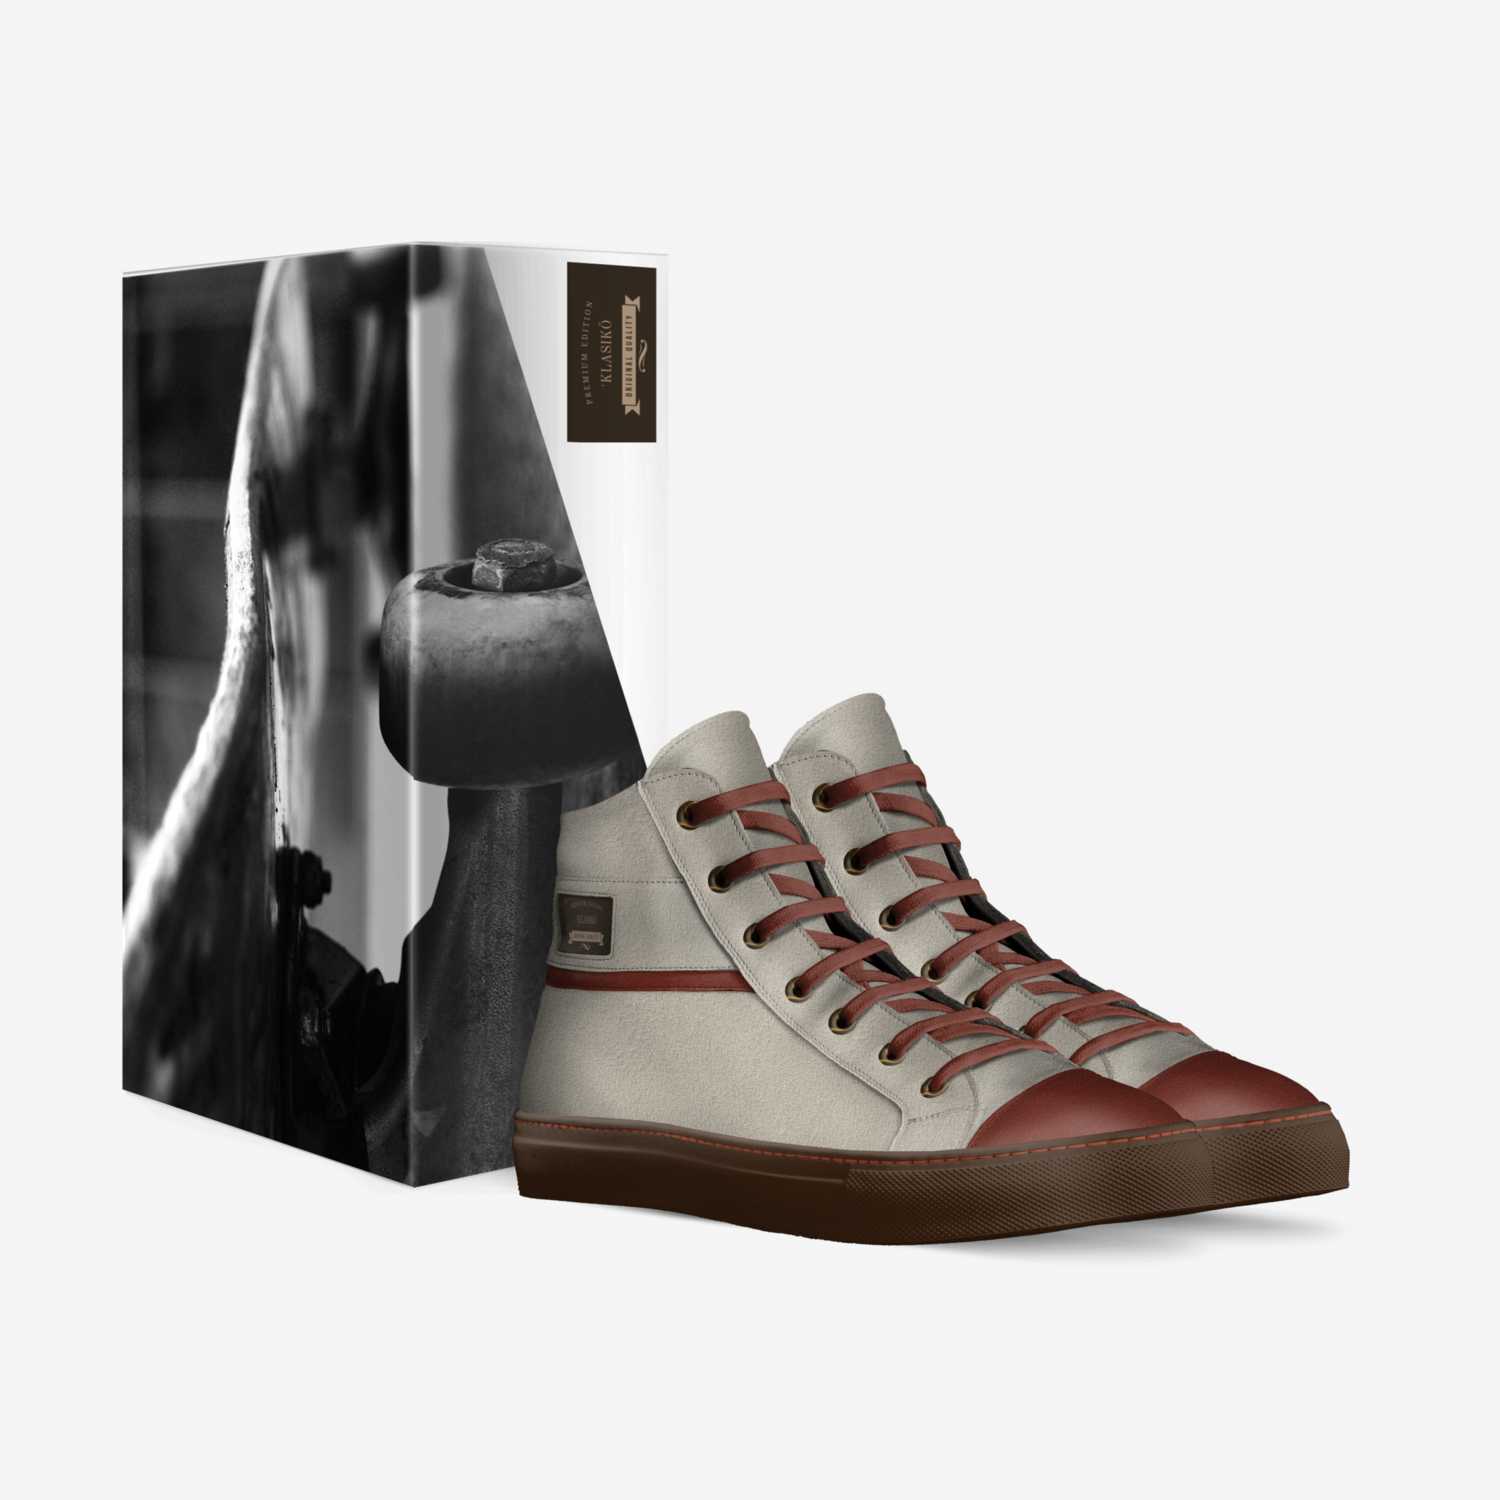 ˈklasikō custom made in Italy shoes by Frankie Free | Box view